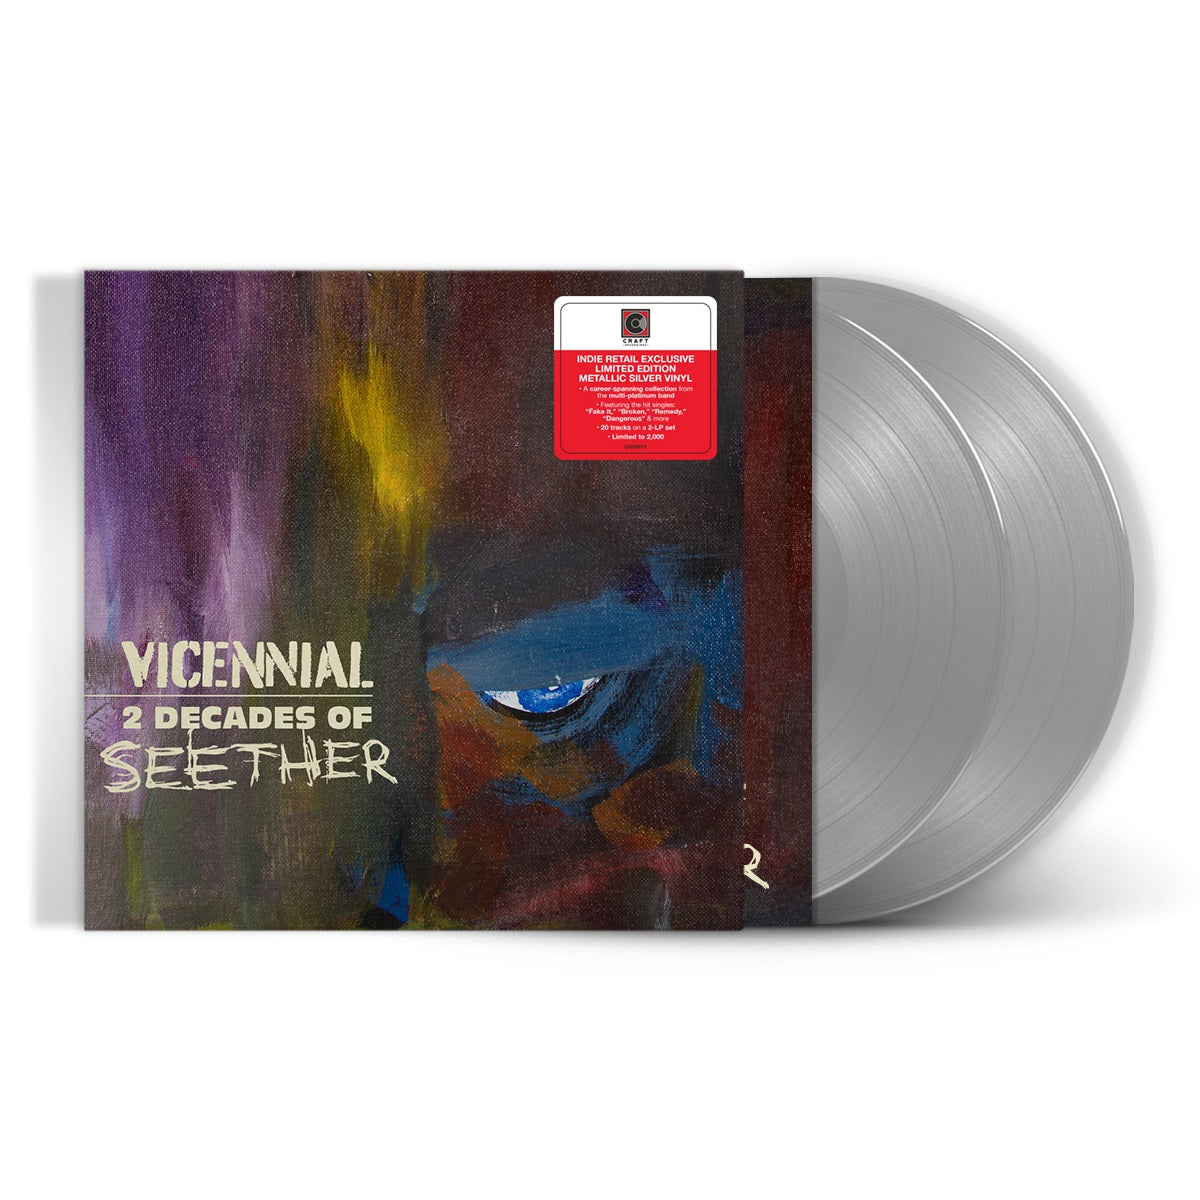 Seether - Vicennial - 2 Decades Of Seether [Metallic Silver 2 LP] [Vinyl]